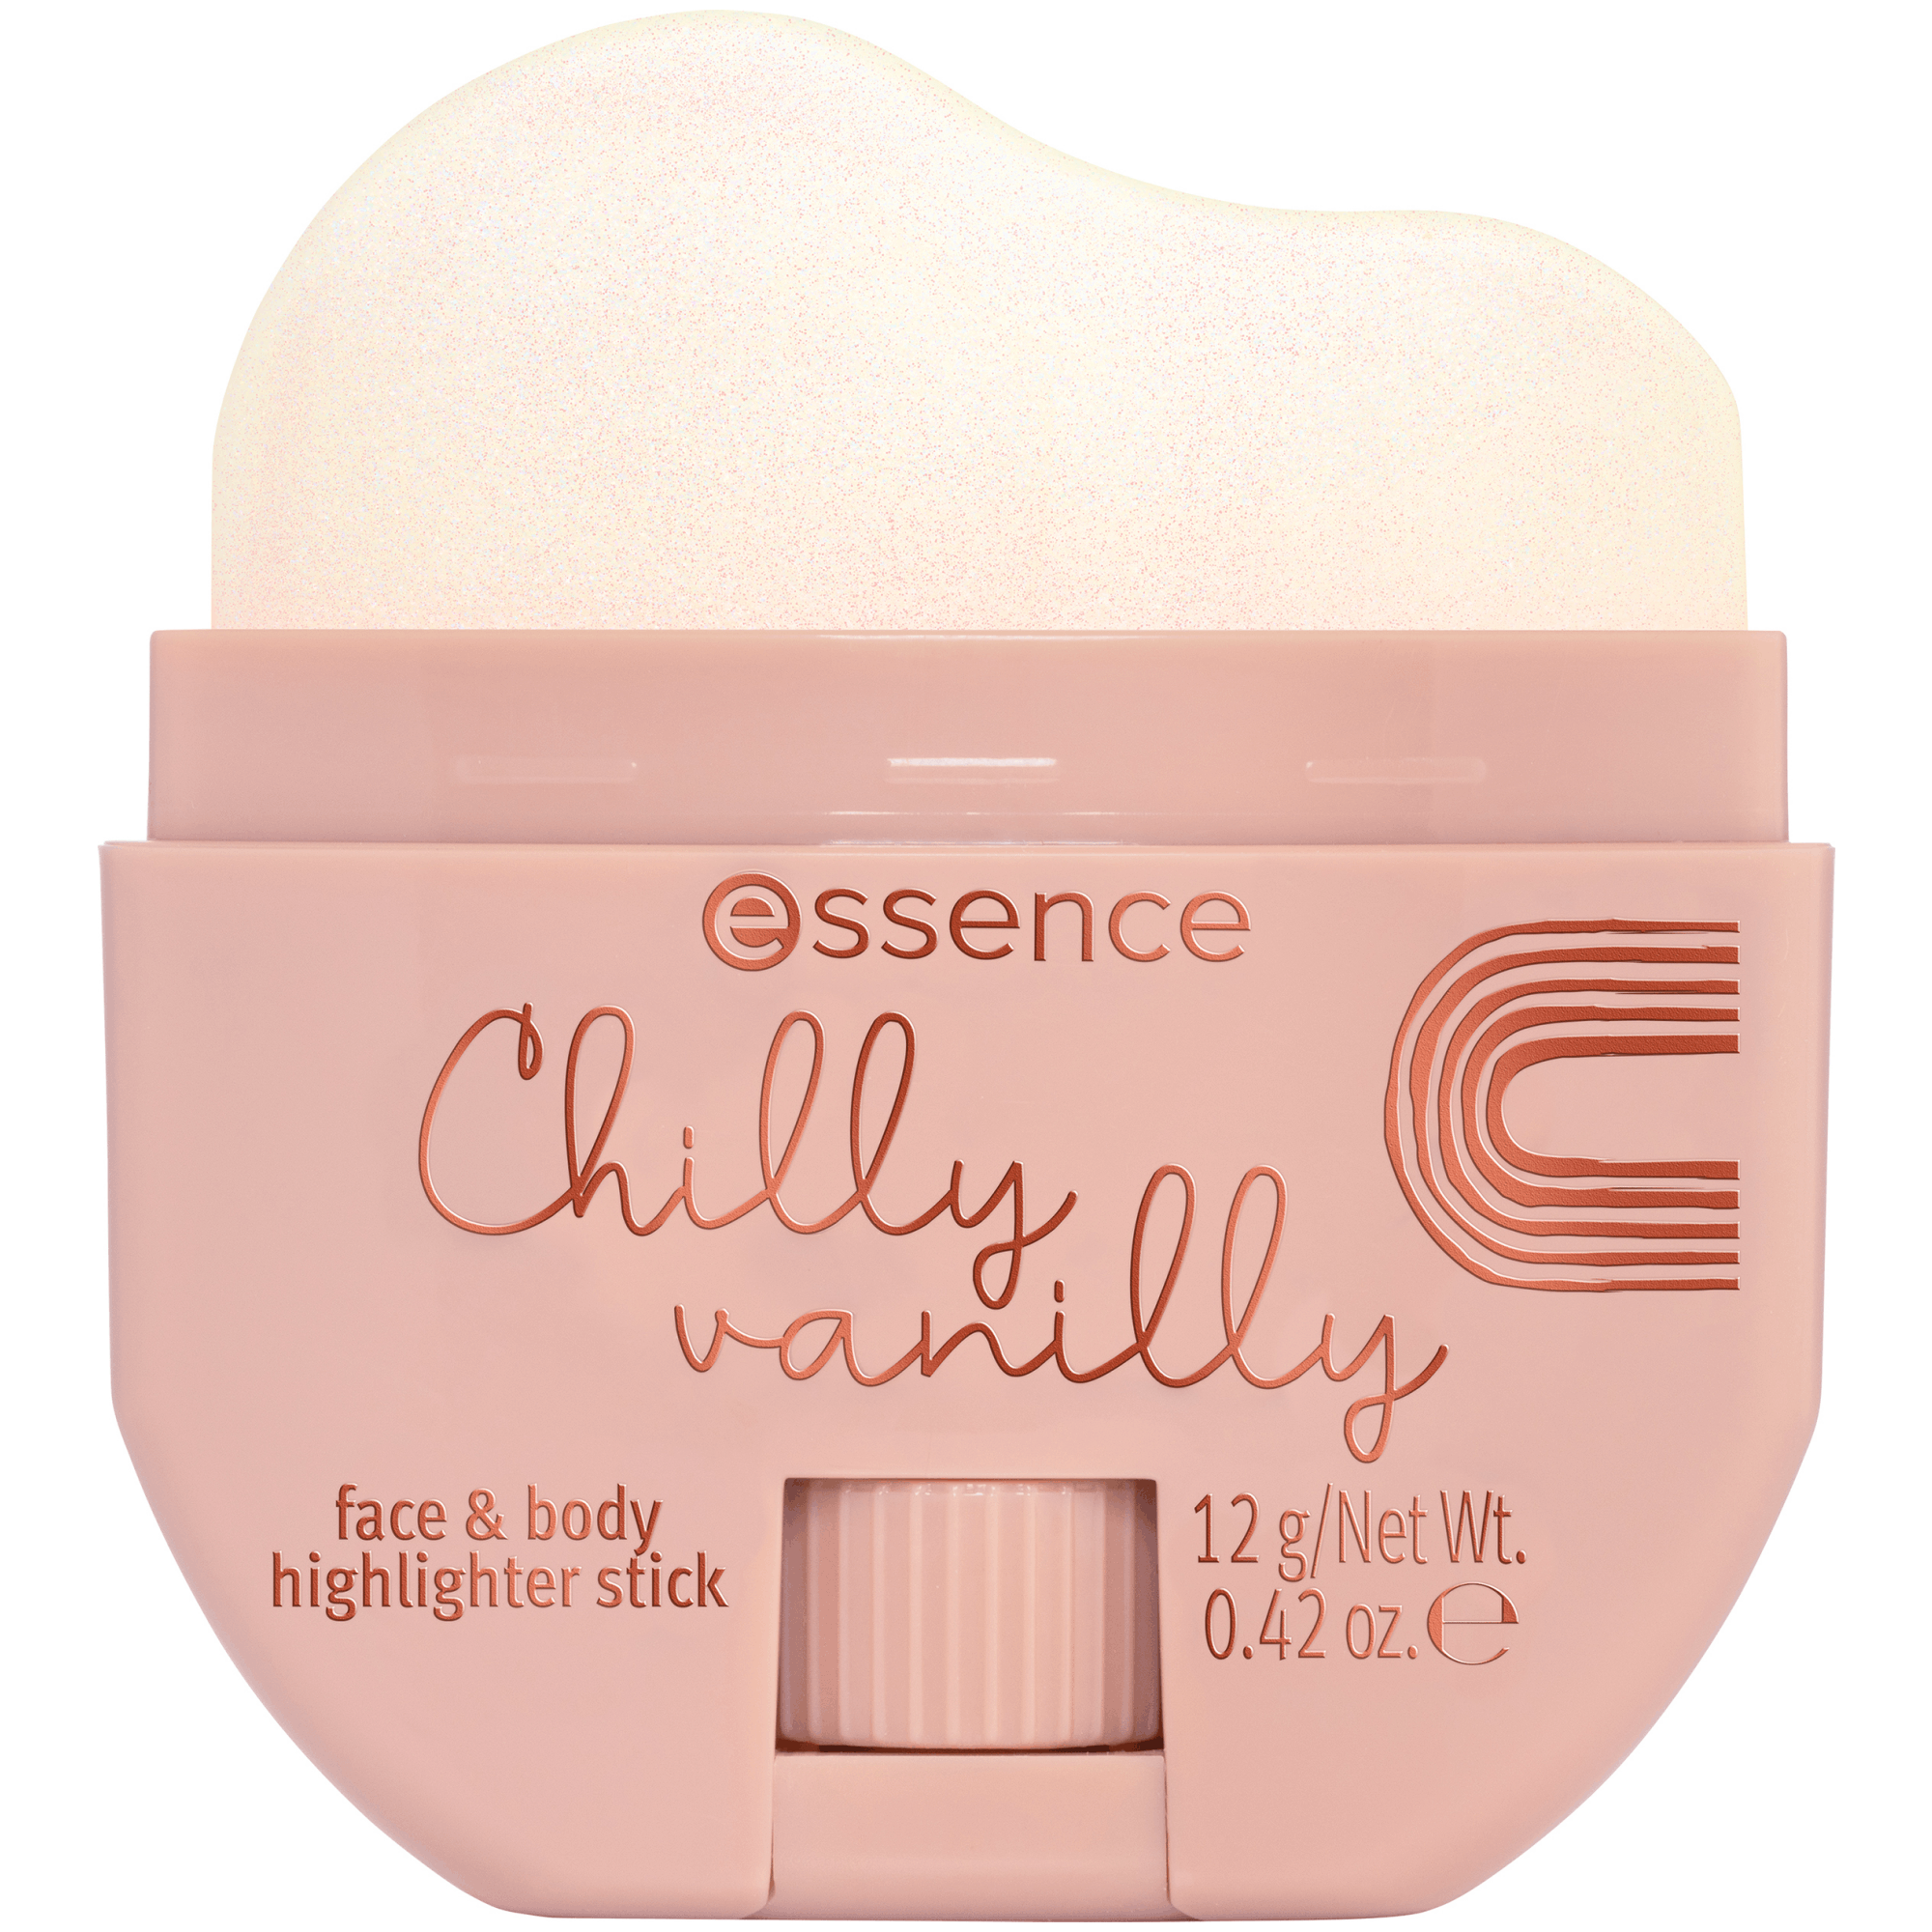 Essence Chilly Vanilly Face & Body Highlighter Stick 01 12 g - £3.75